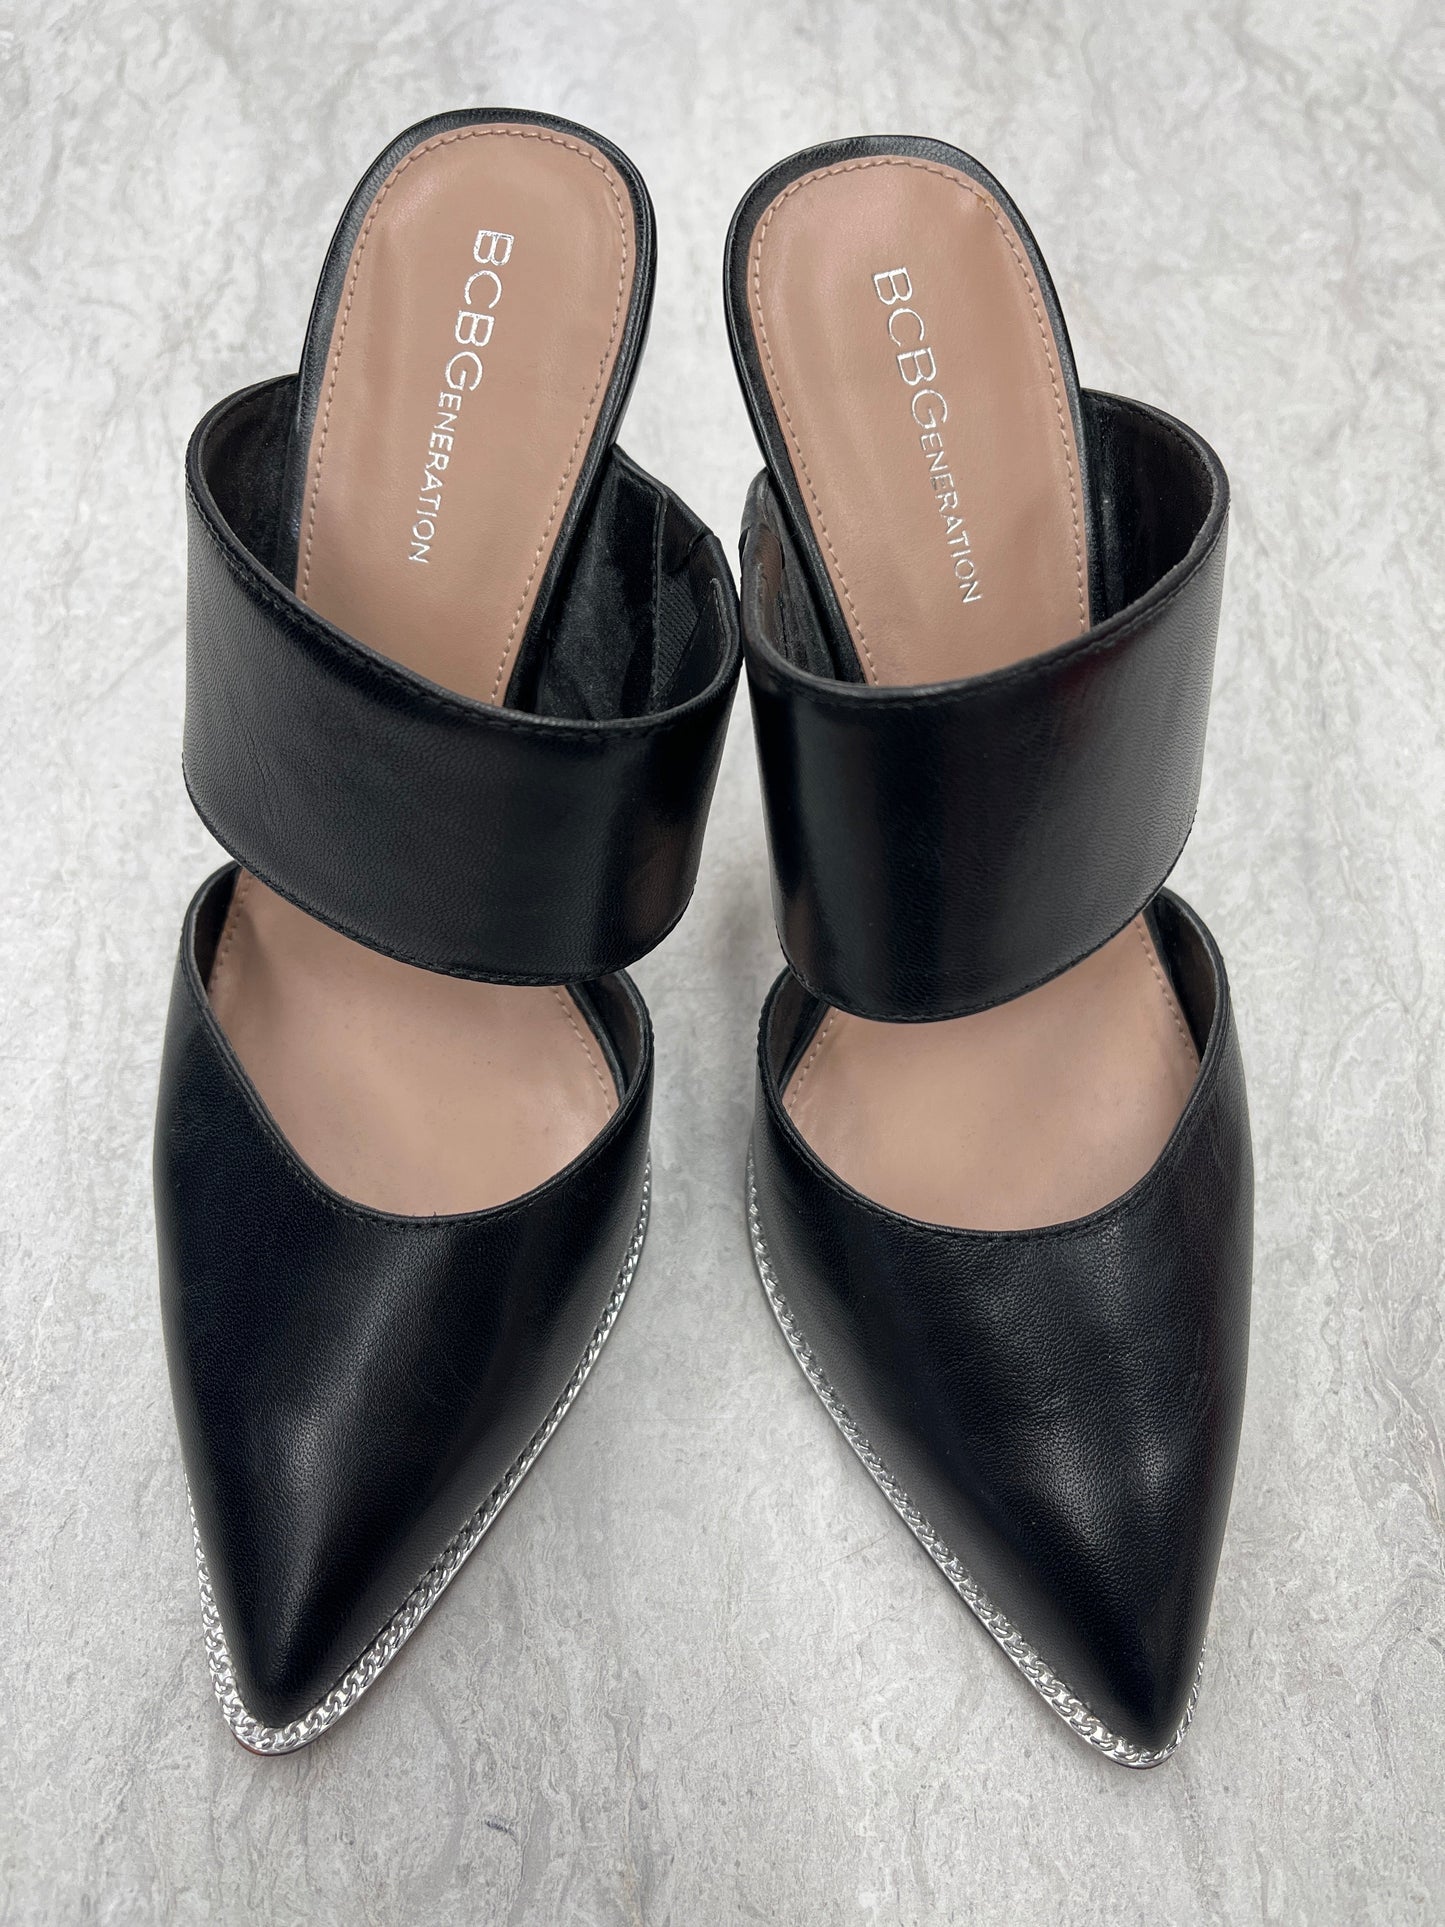 Black Shoes Heels Stiletto Bcbgeneration, Size 8